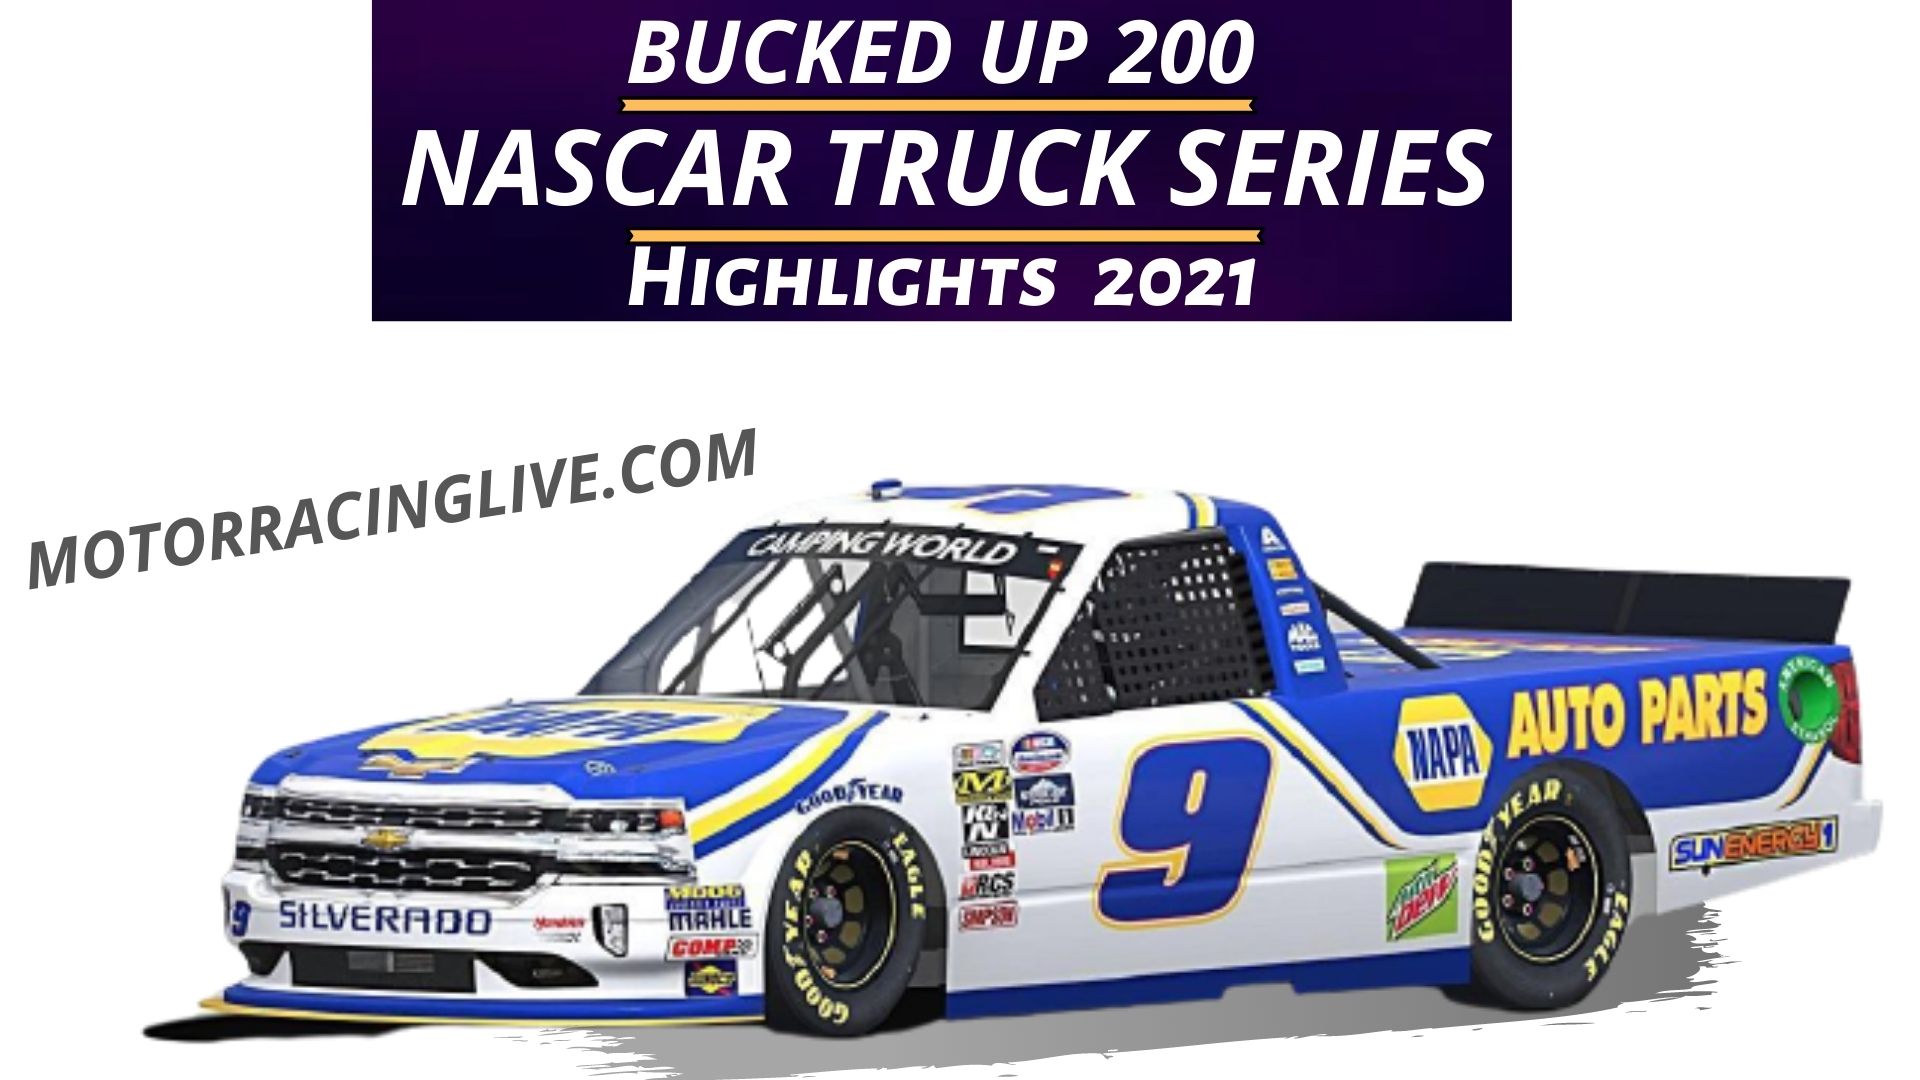 BUCKED UP 200 Highlights 2021 NASCAR Truck Series